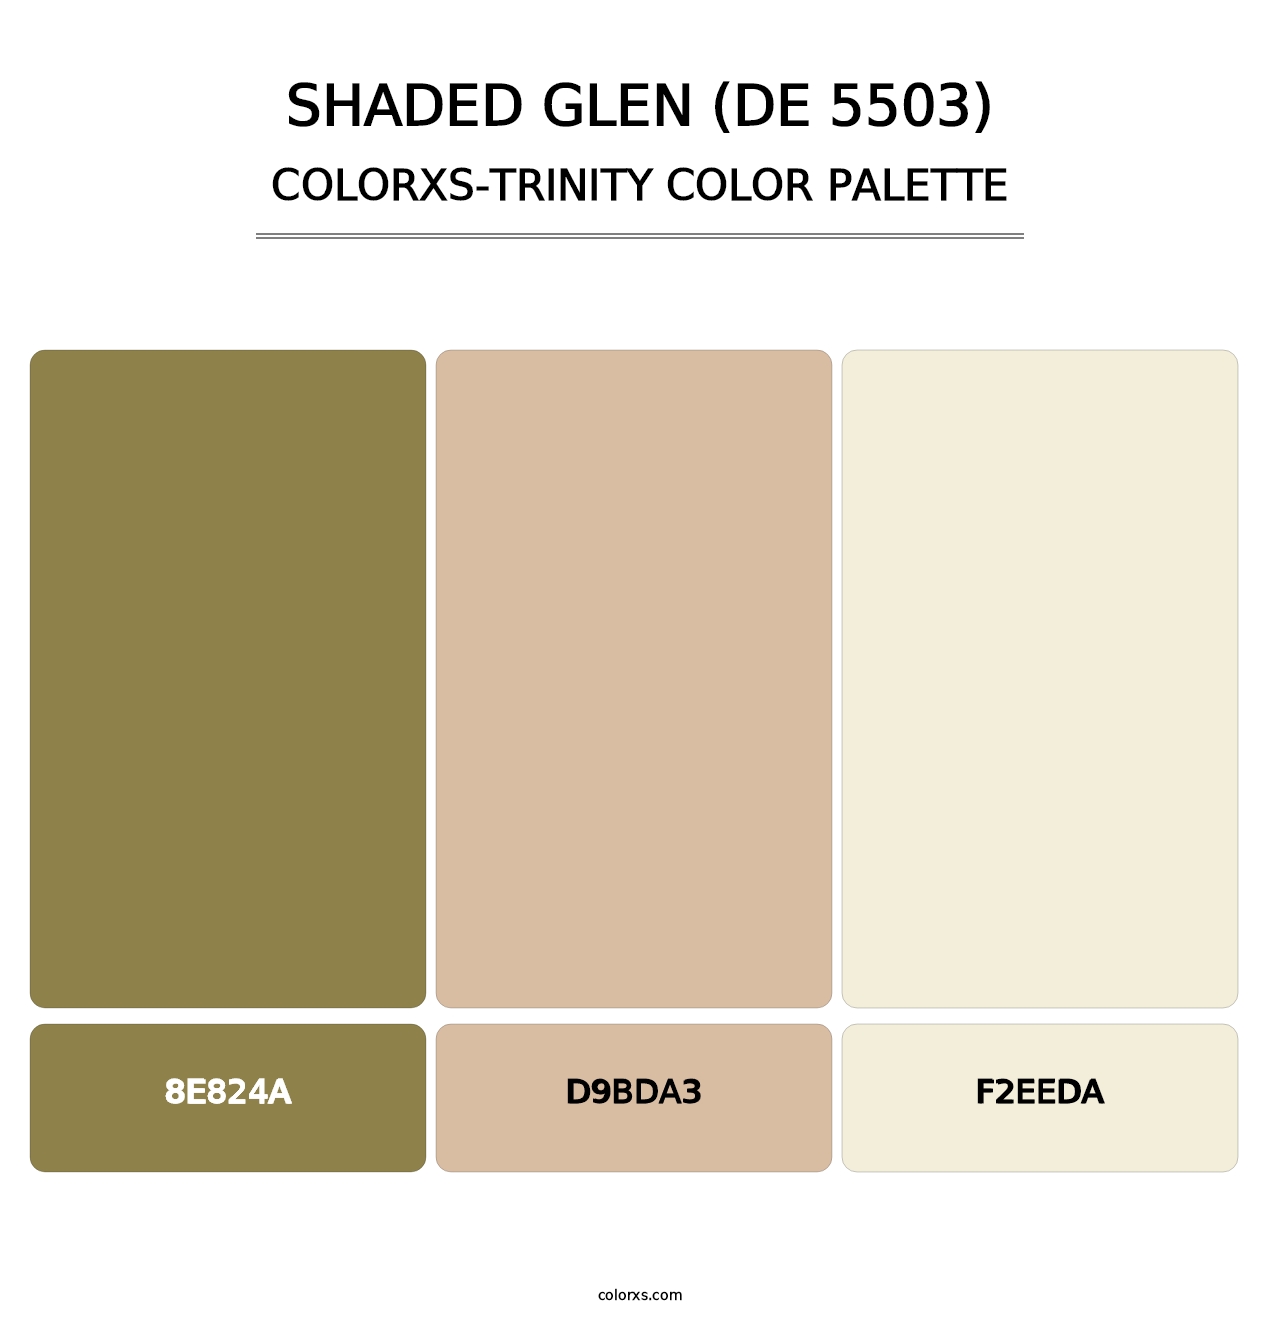 Shaded Glen (DE 5503) - Colorxs Trinity Palette